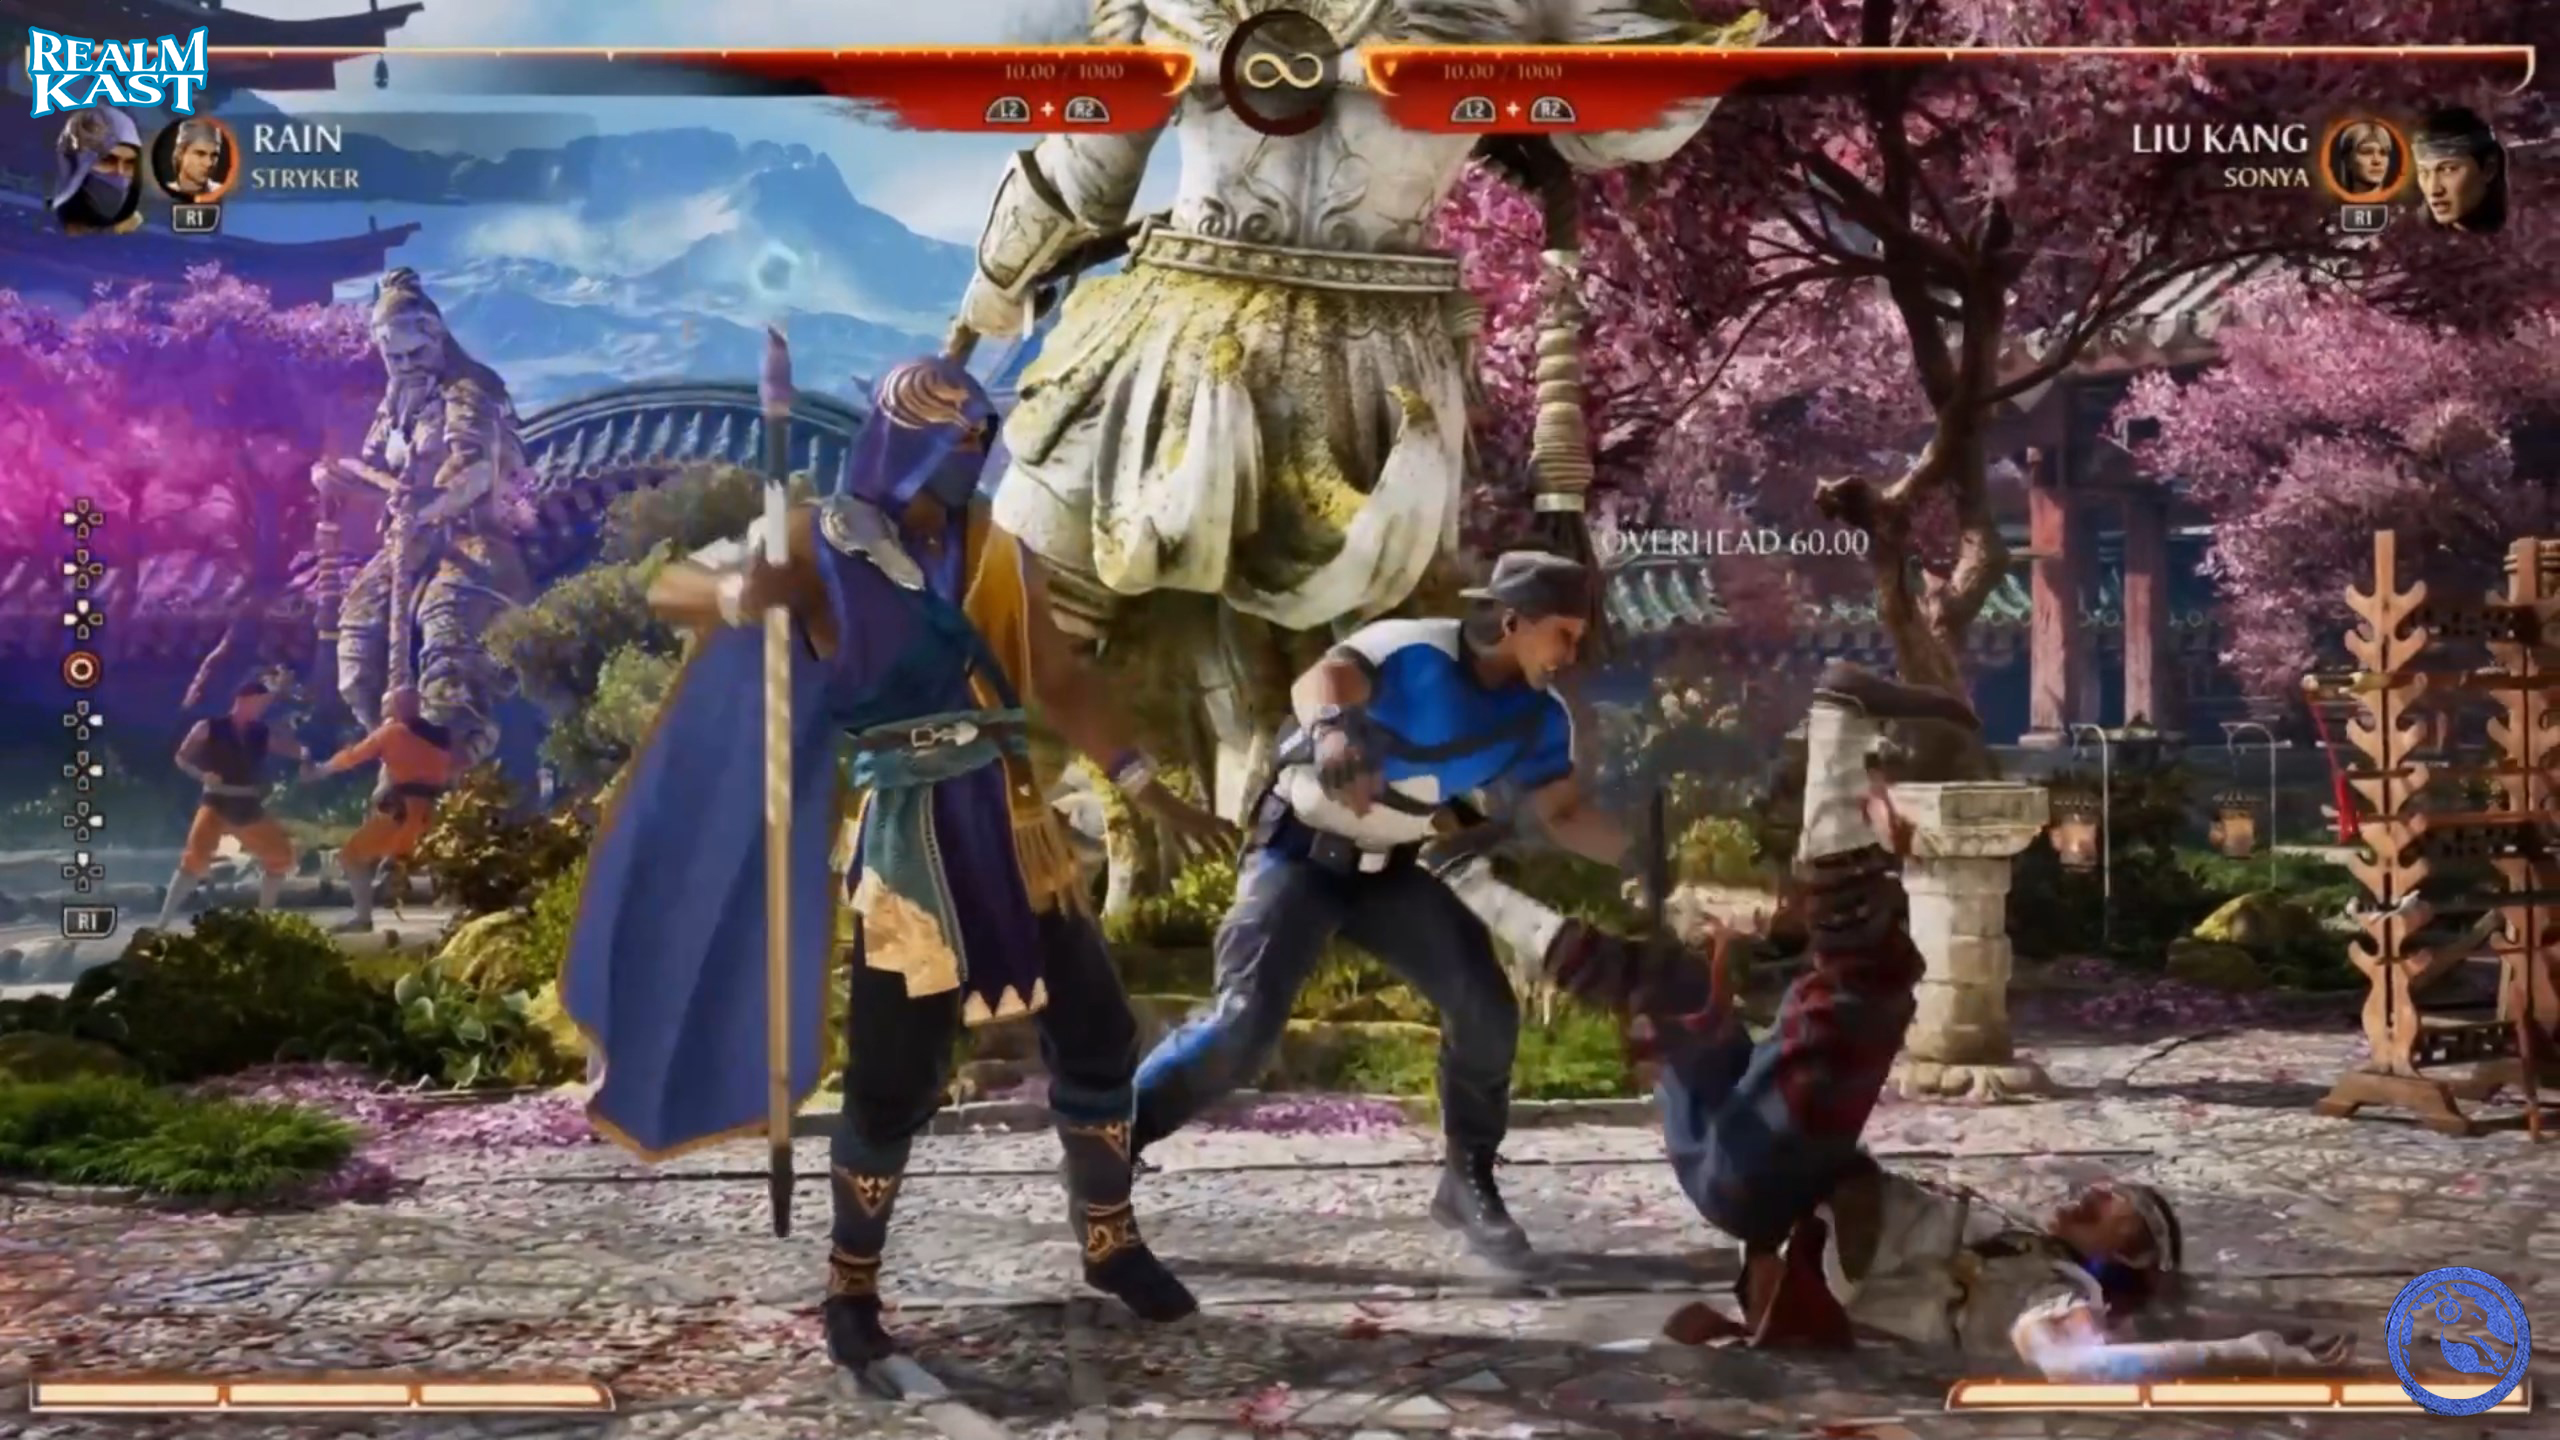 The Realm Kast: Mortal Kombat Online on X: #Baraka may have